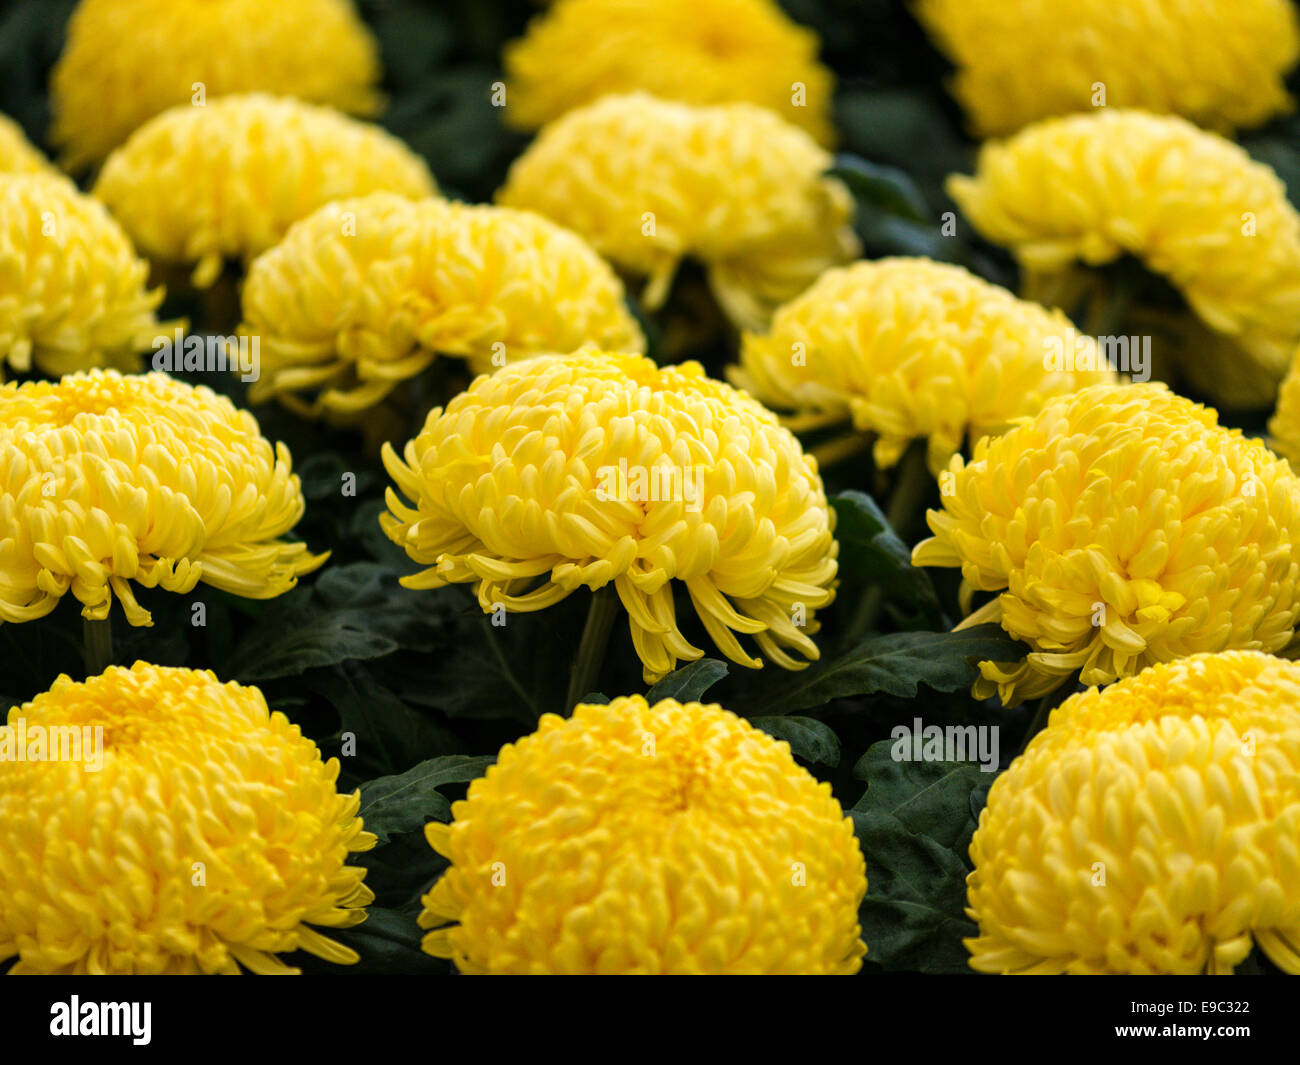 Chrysanthemum display multiple vivid yellow flowers with dark green foliage background. Stock Photo